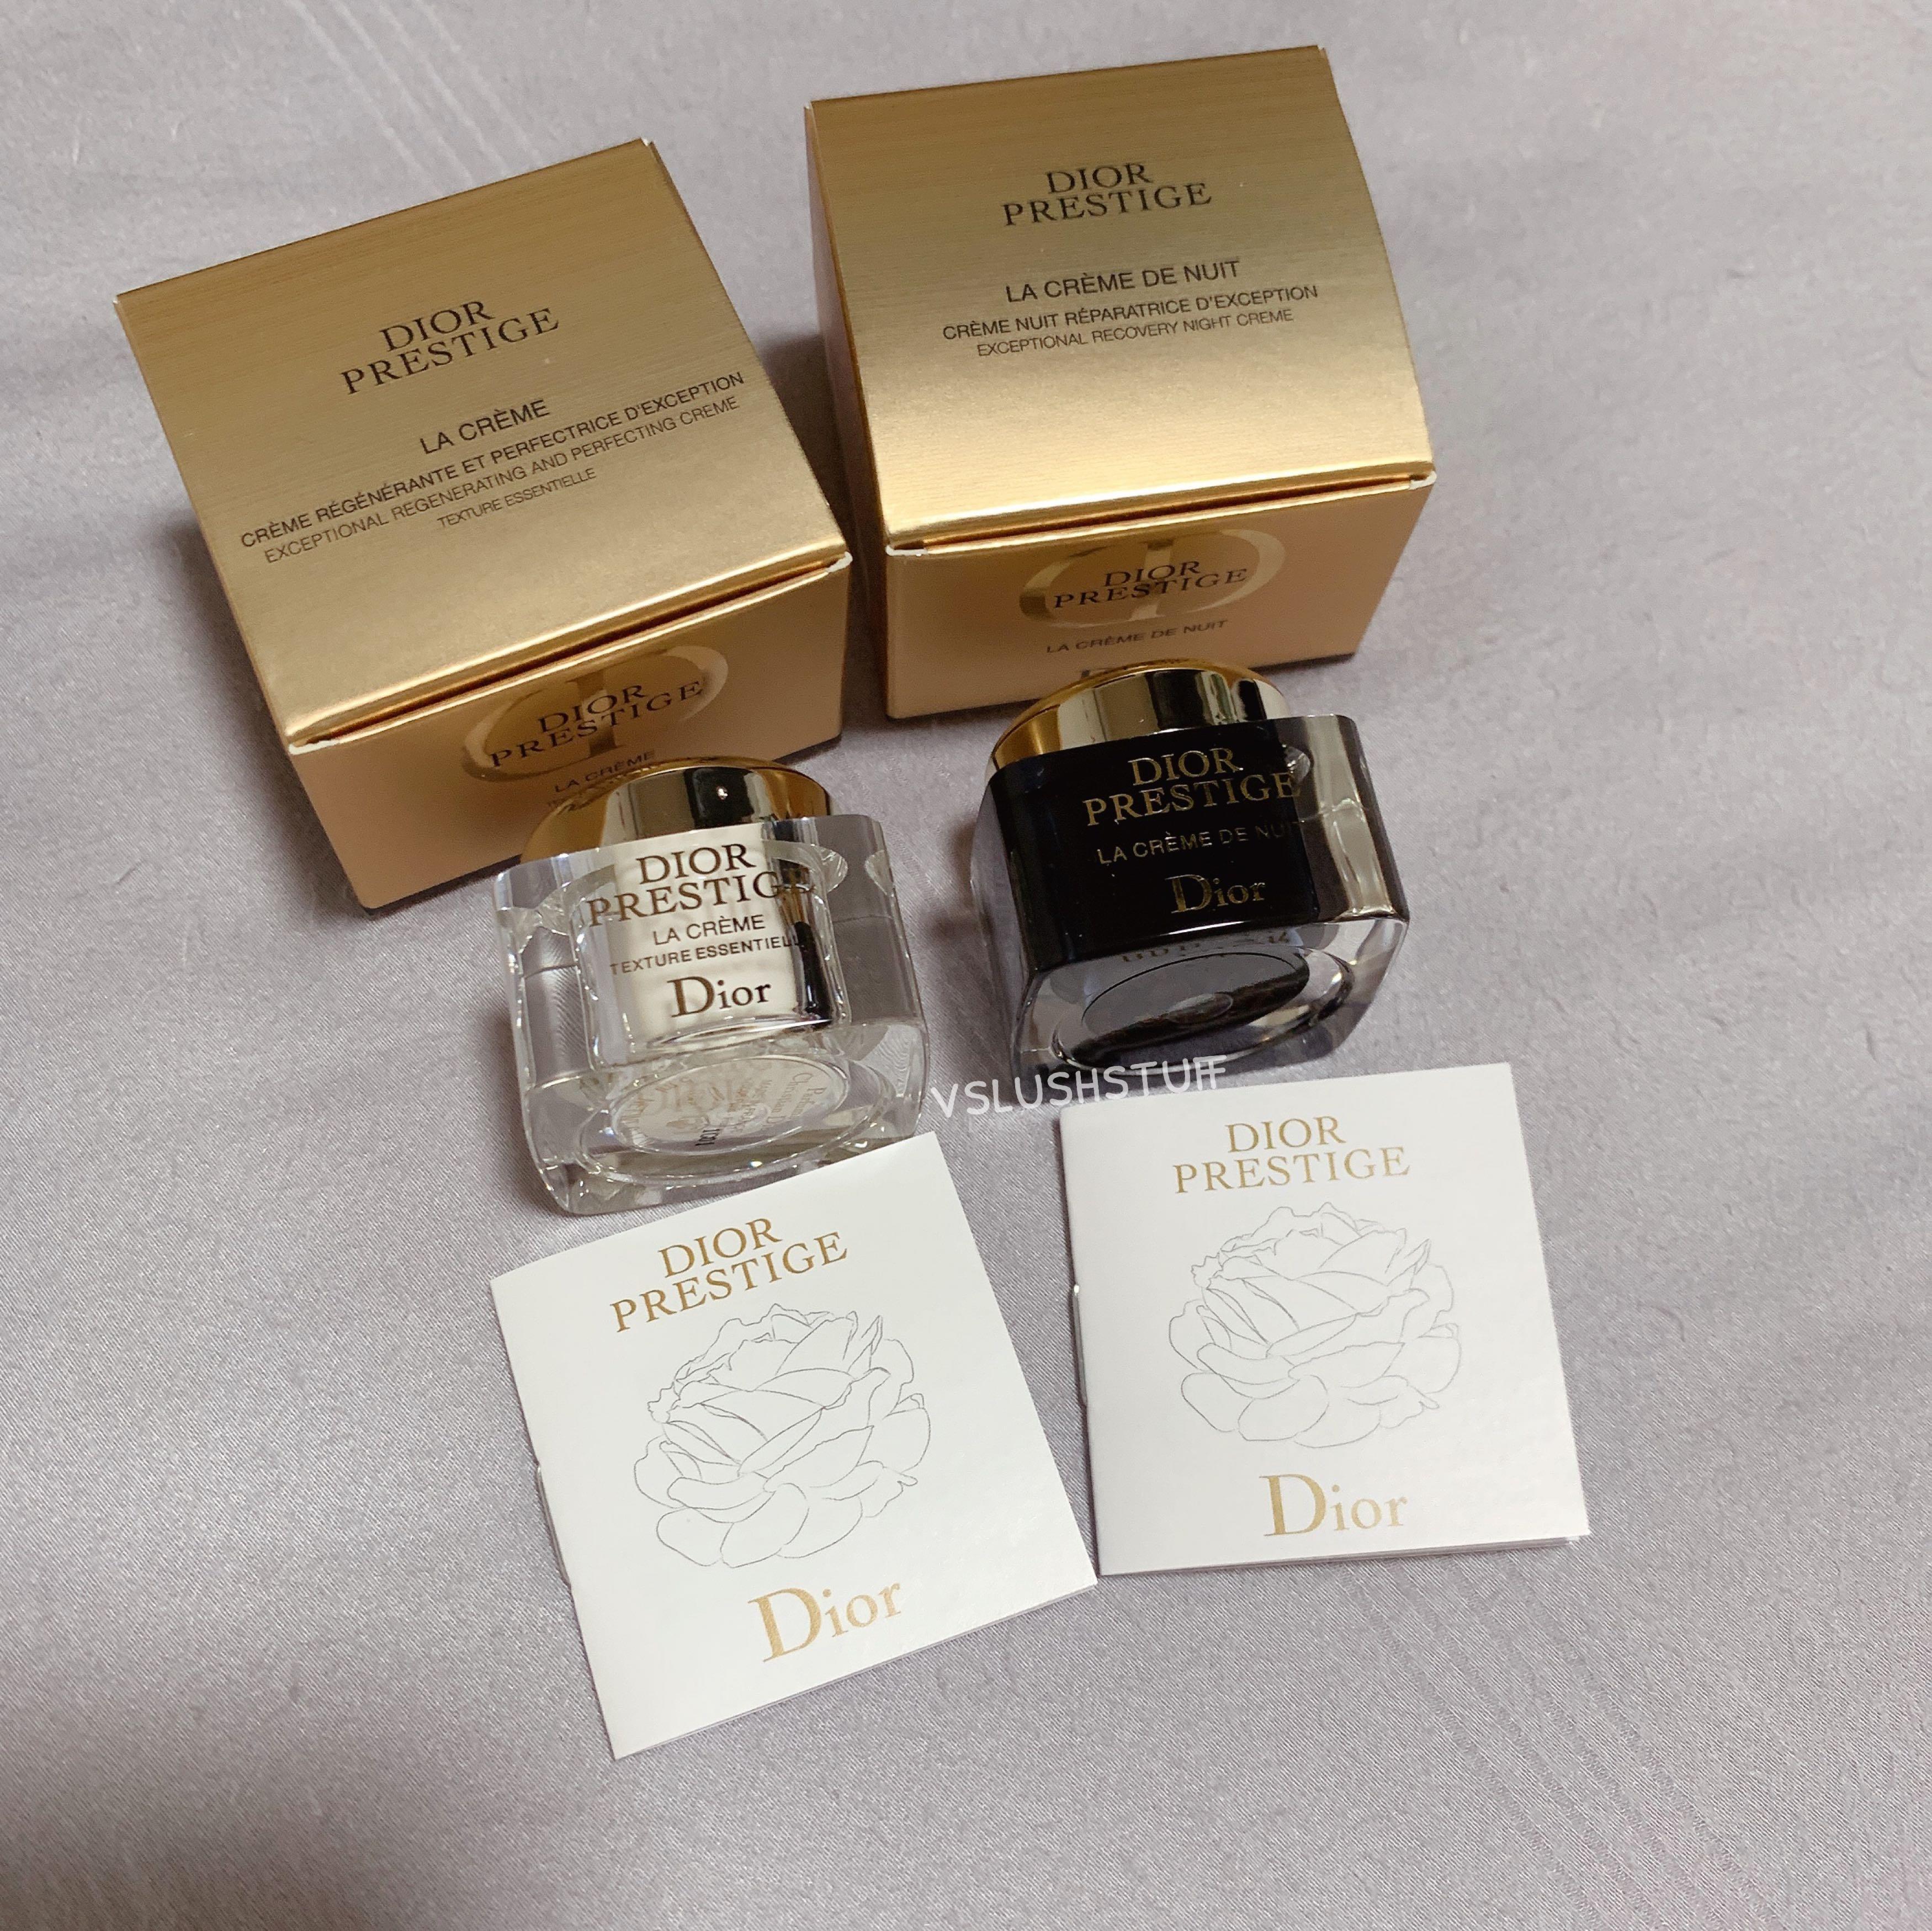 Dior Prestige La Creme De Nuit Night Cream 5ml for sale online  eBay